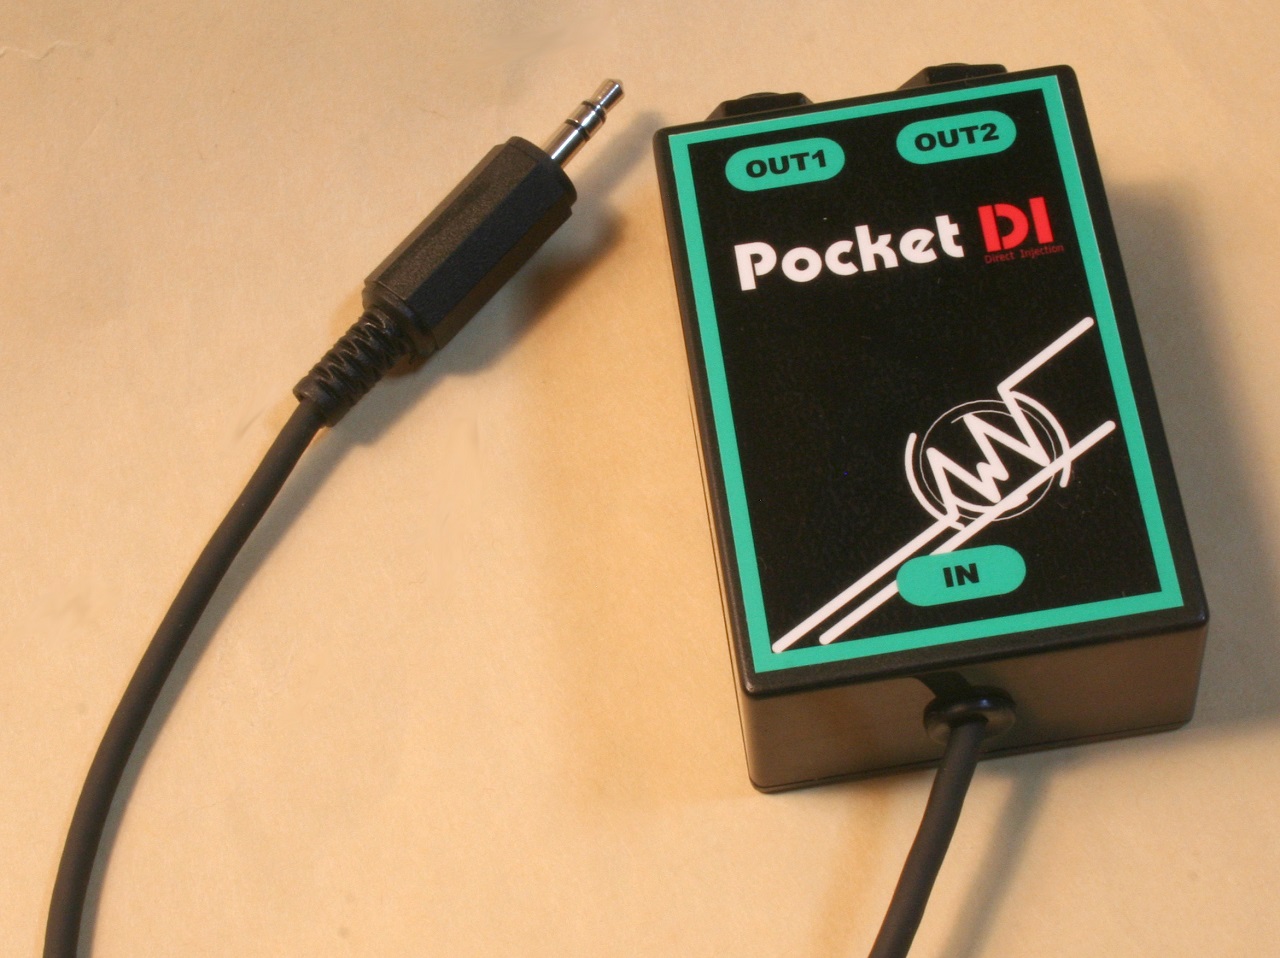 Pocket DI